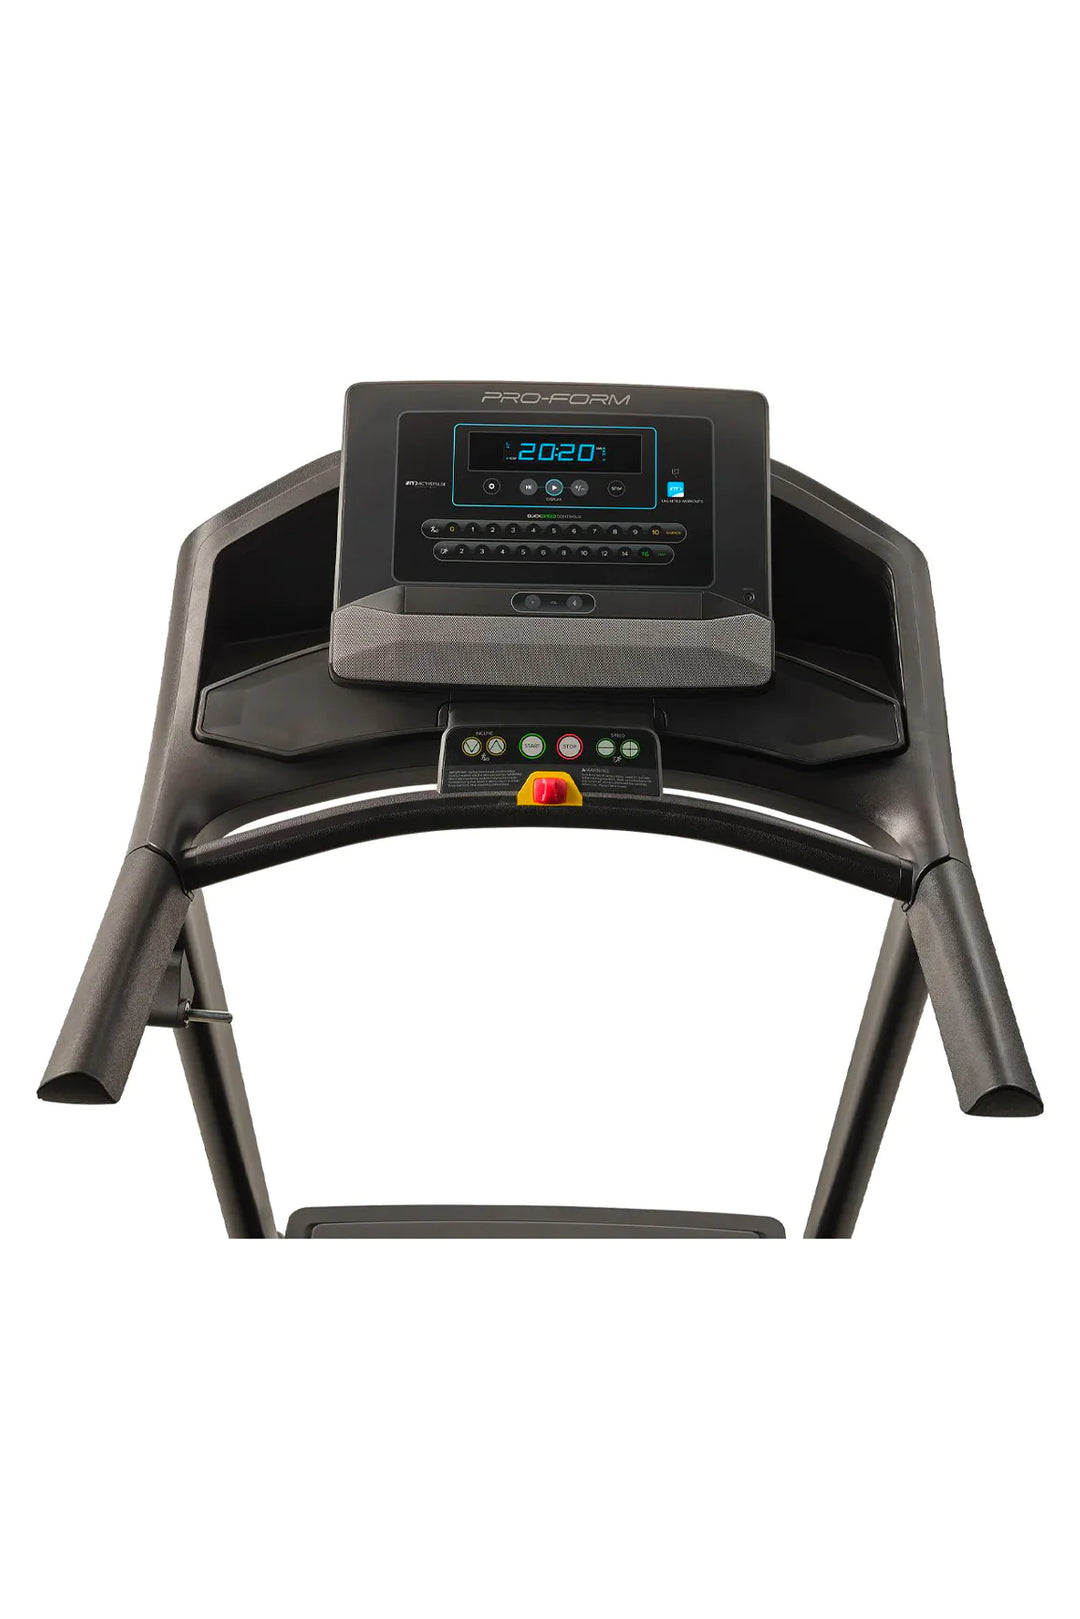 Next Fitness Home Gym NFHG-10250 + Pro Form Cardio